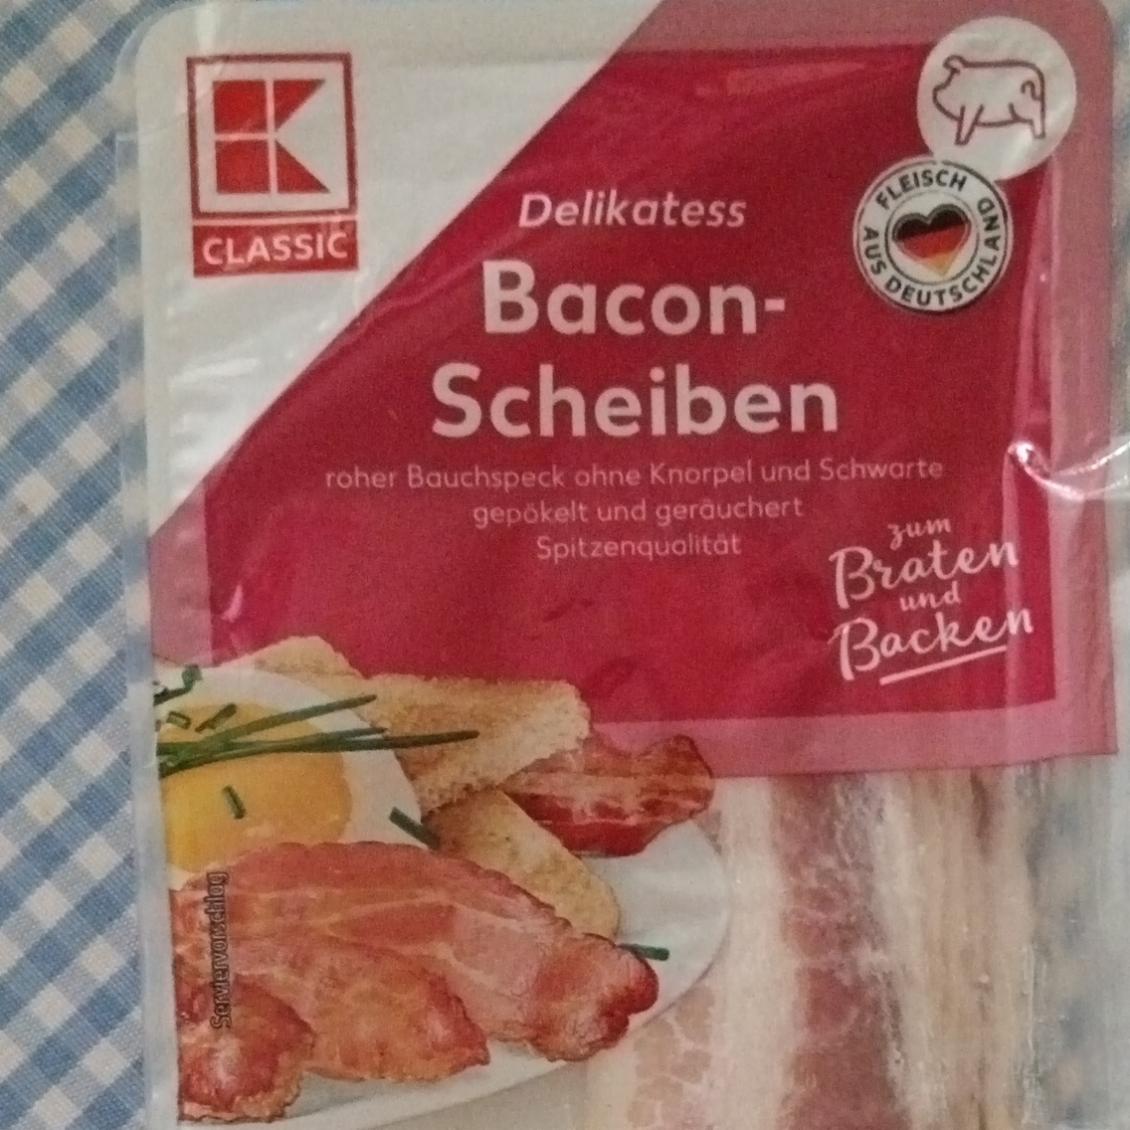 Фото - Delikatess Bacon-Scheiben K-Classic